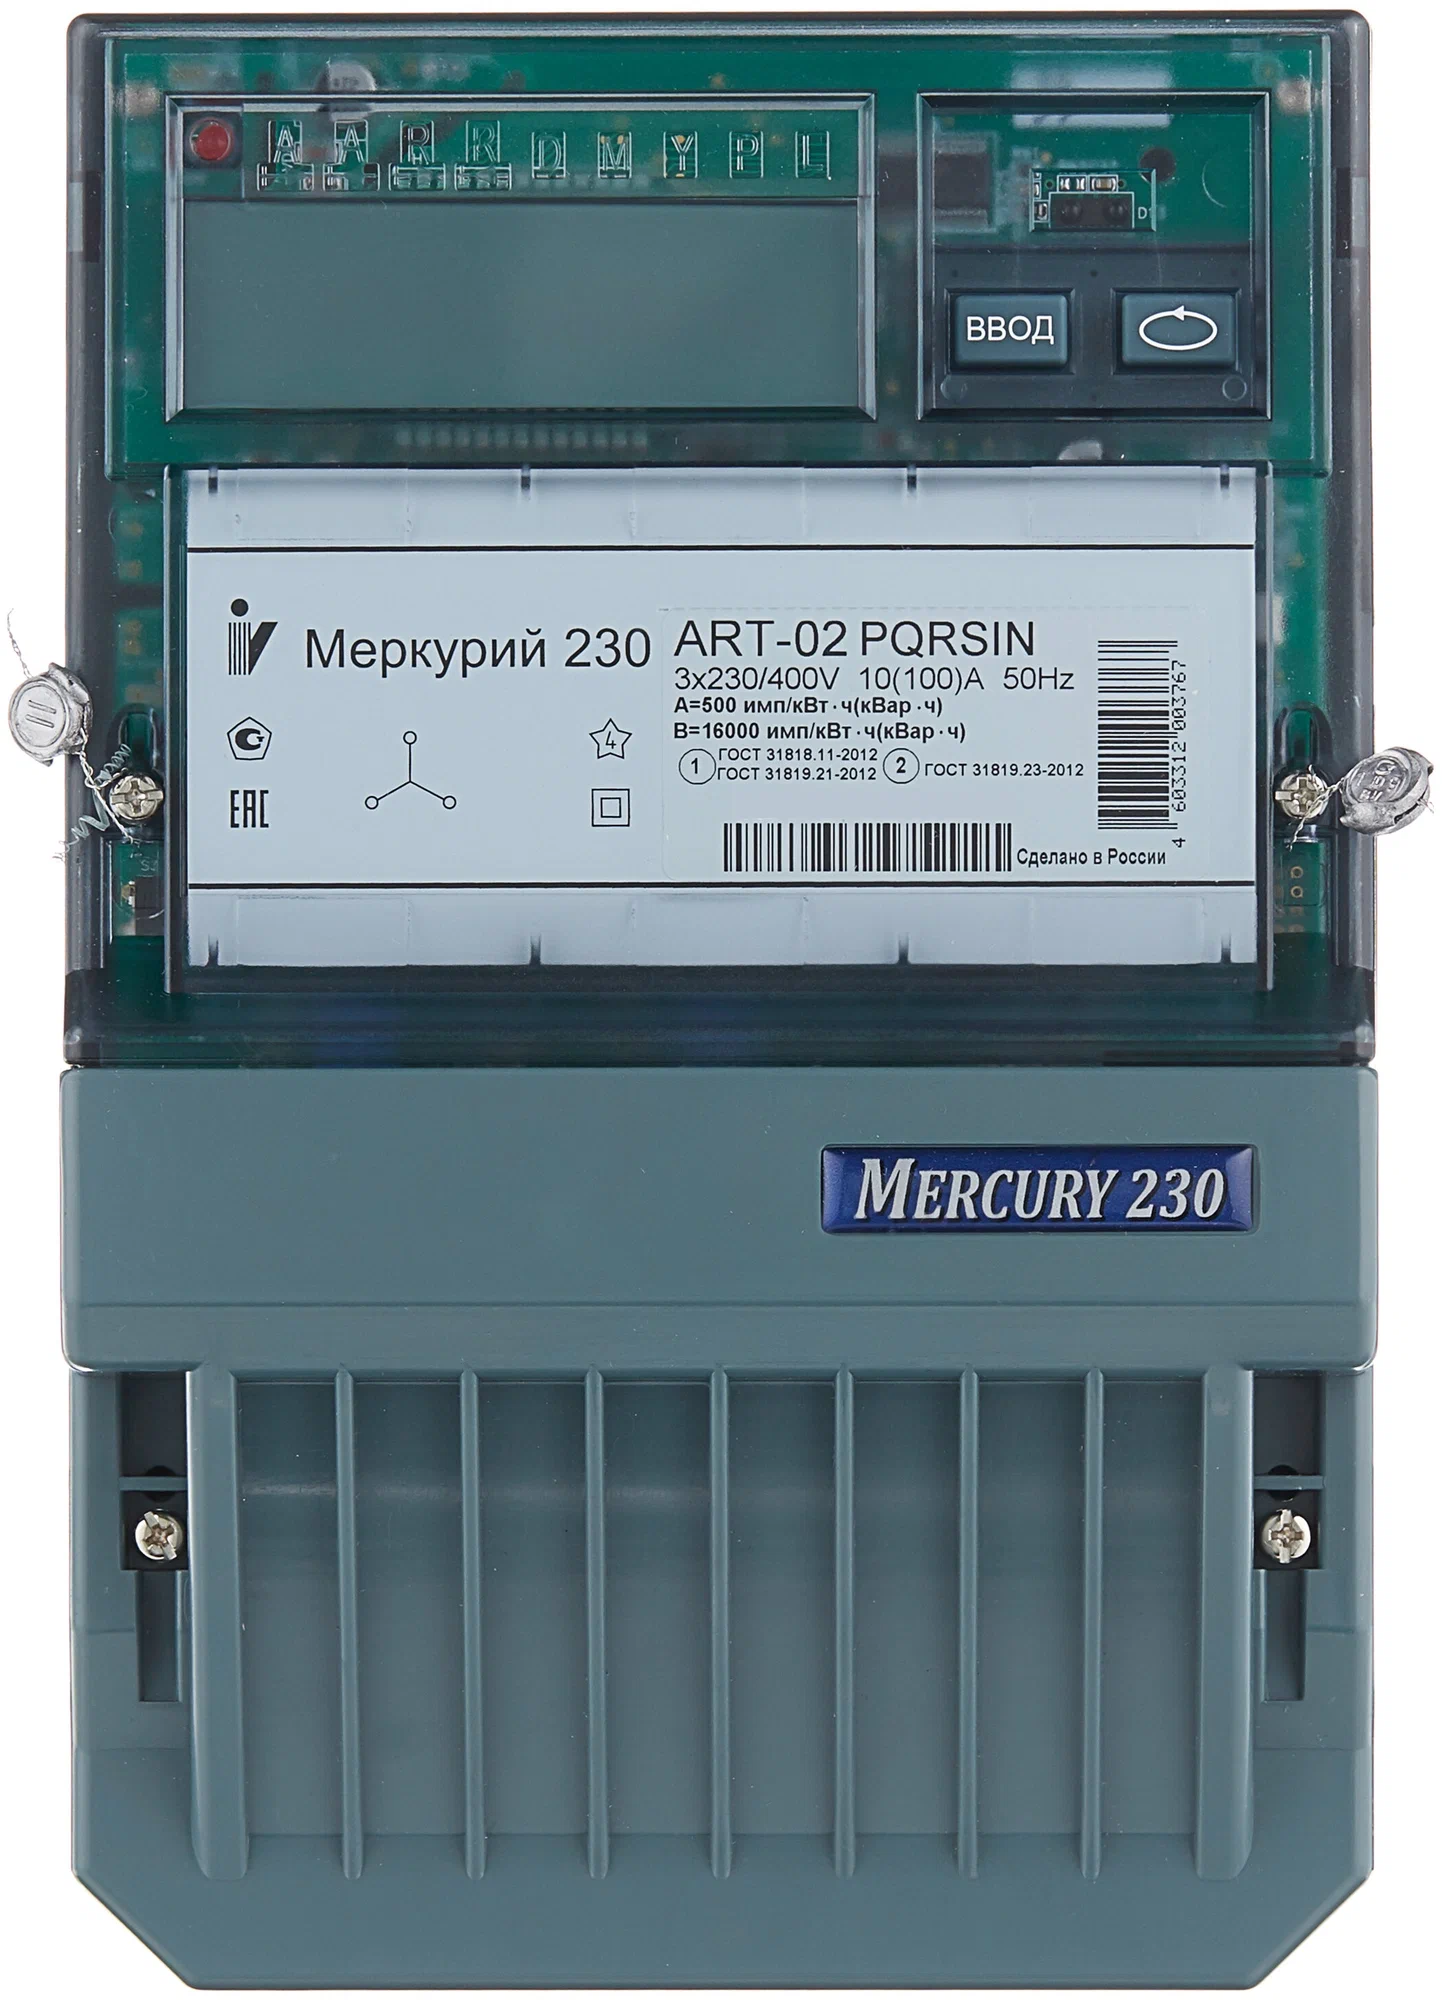 Счетчик электроэнергии трехфазный многотарифный INCOTEX Меркурий 230 ART-02 PQRSIN 10(100) А без привязки к региону